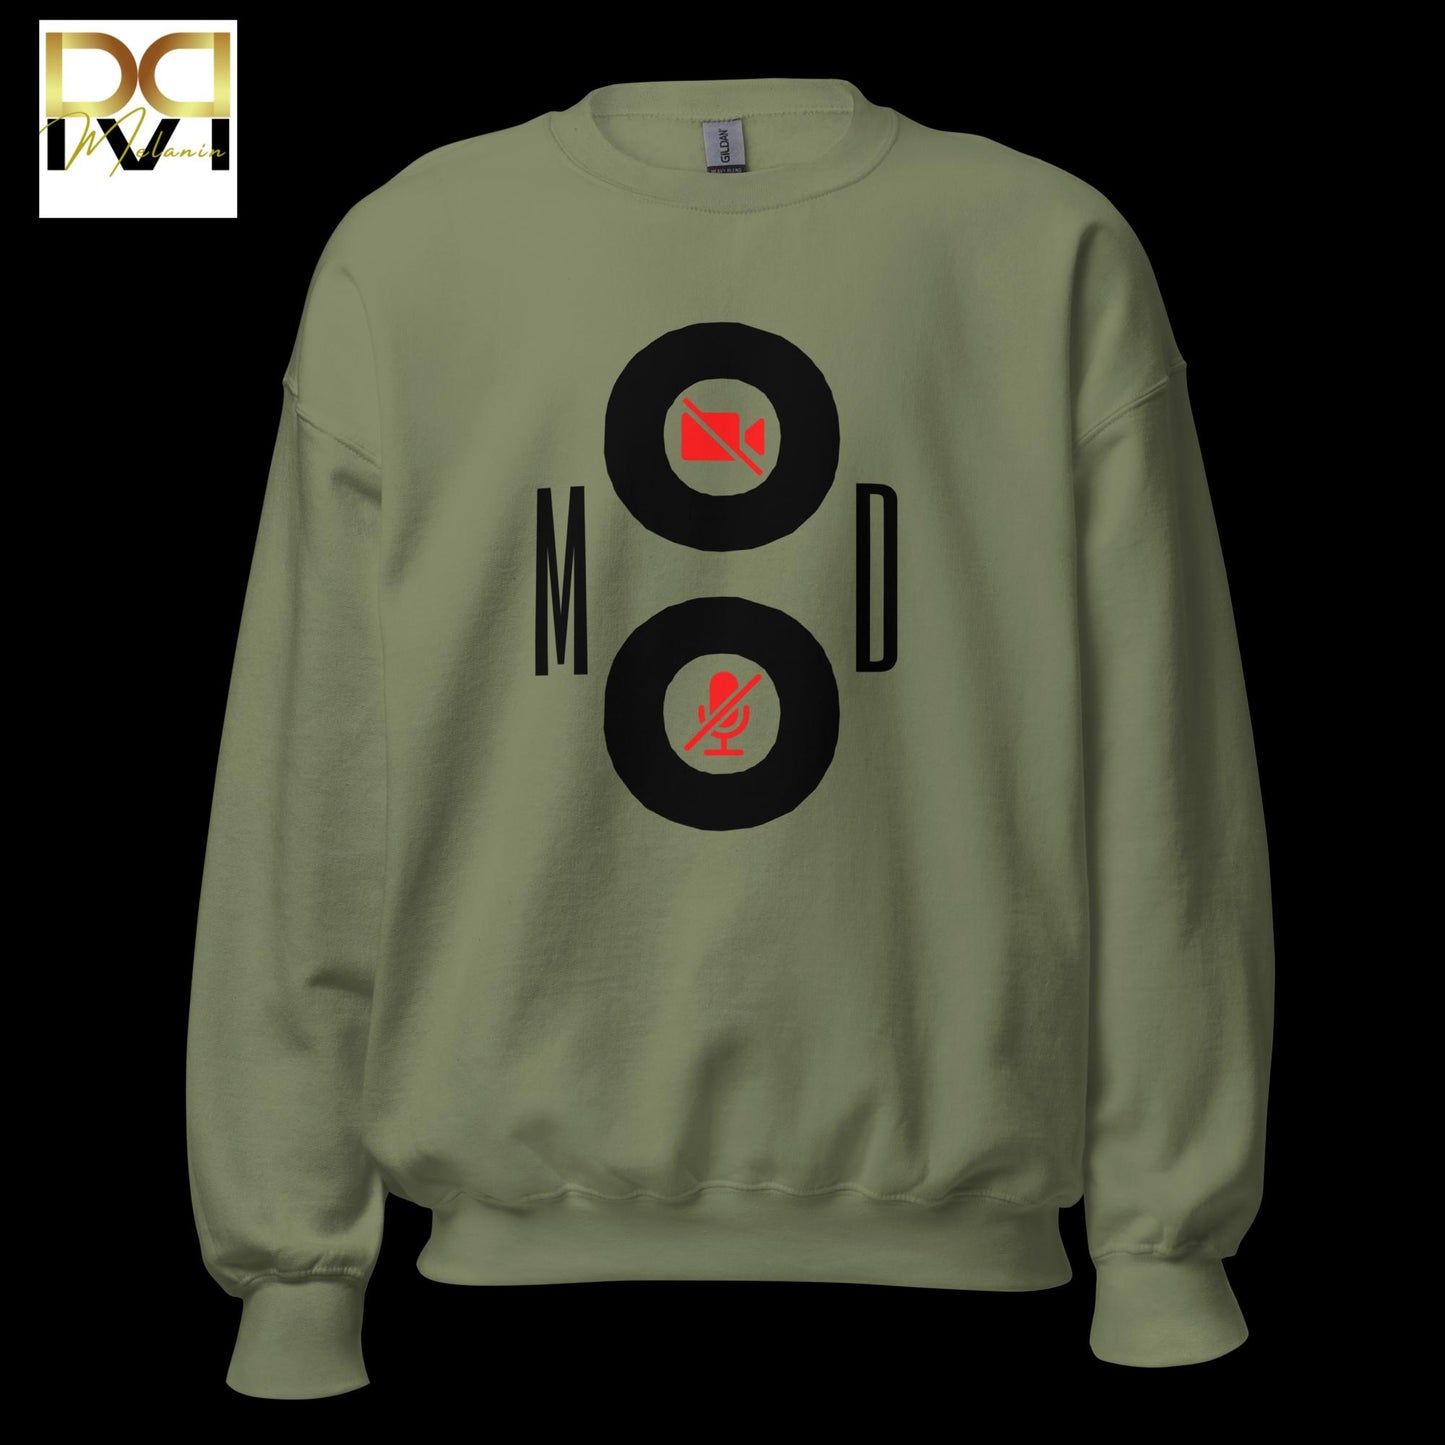 "Mood" Artistic Design Sweatshirt - Express Yourself Creatively